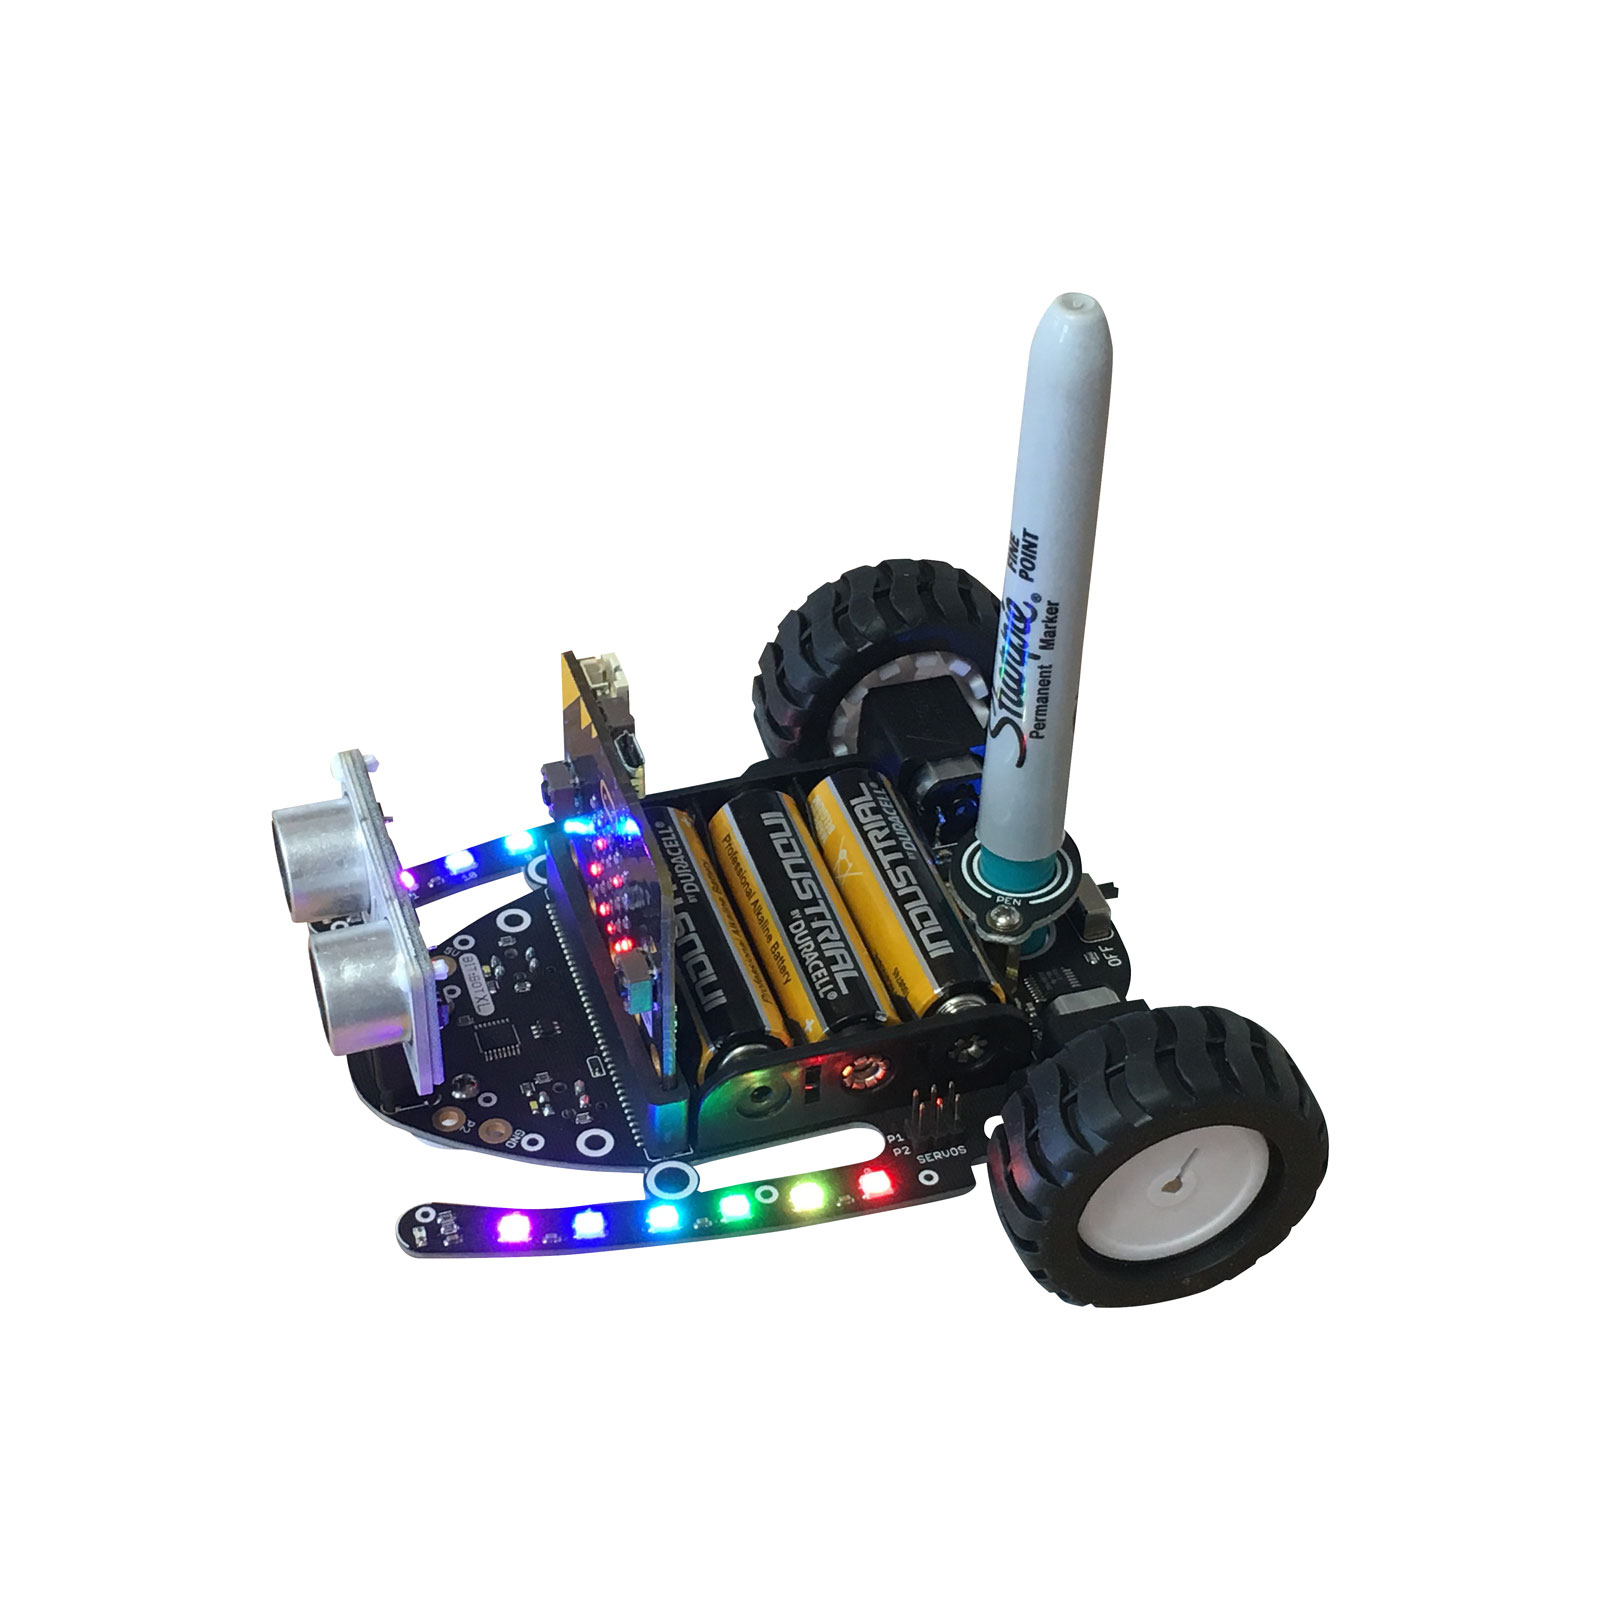 4tronix Bit:Bot XL Robot for BBC micro:bit with Addressable LEDs